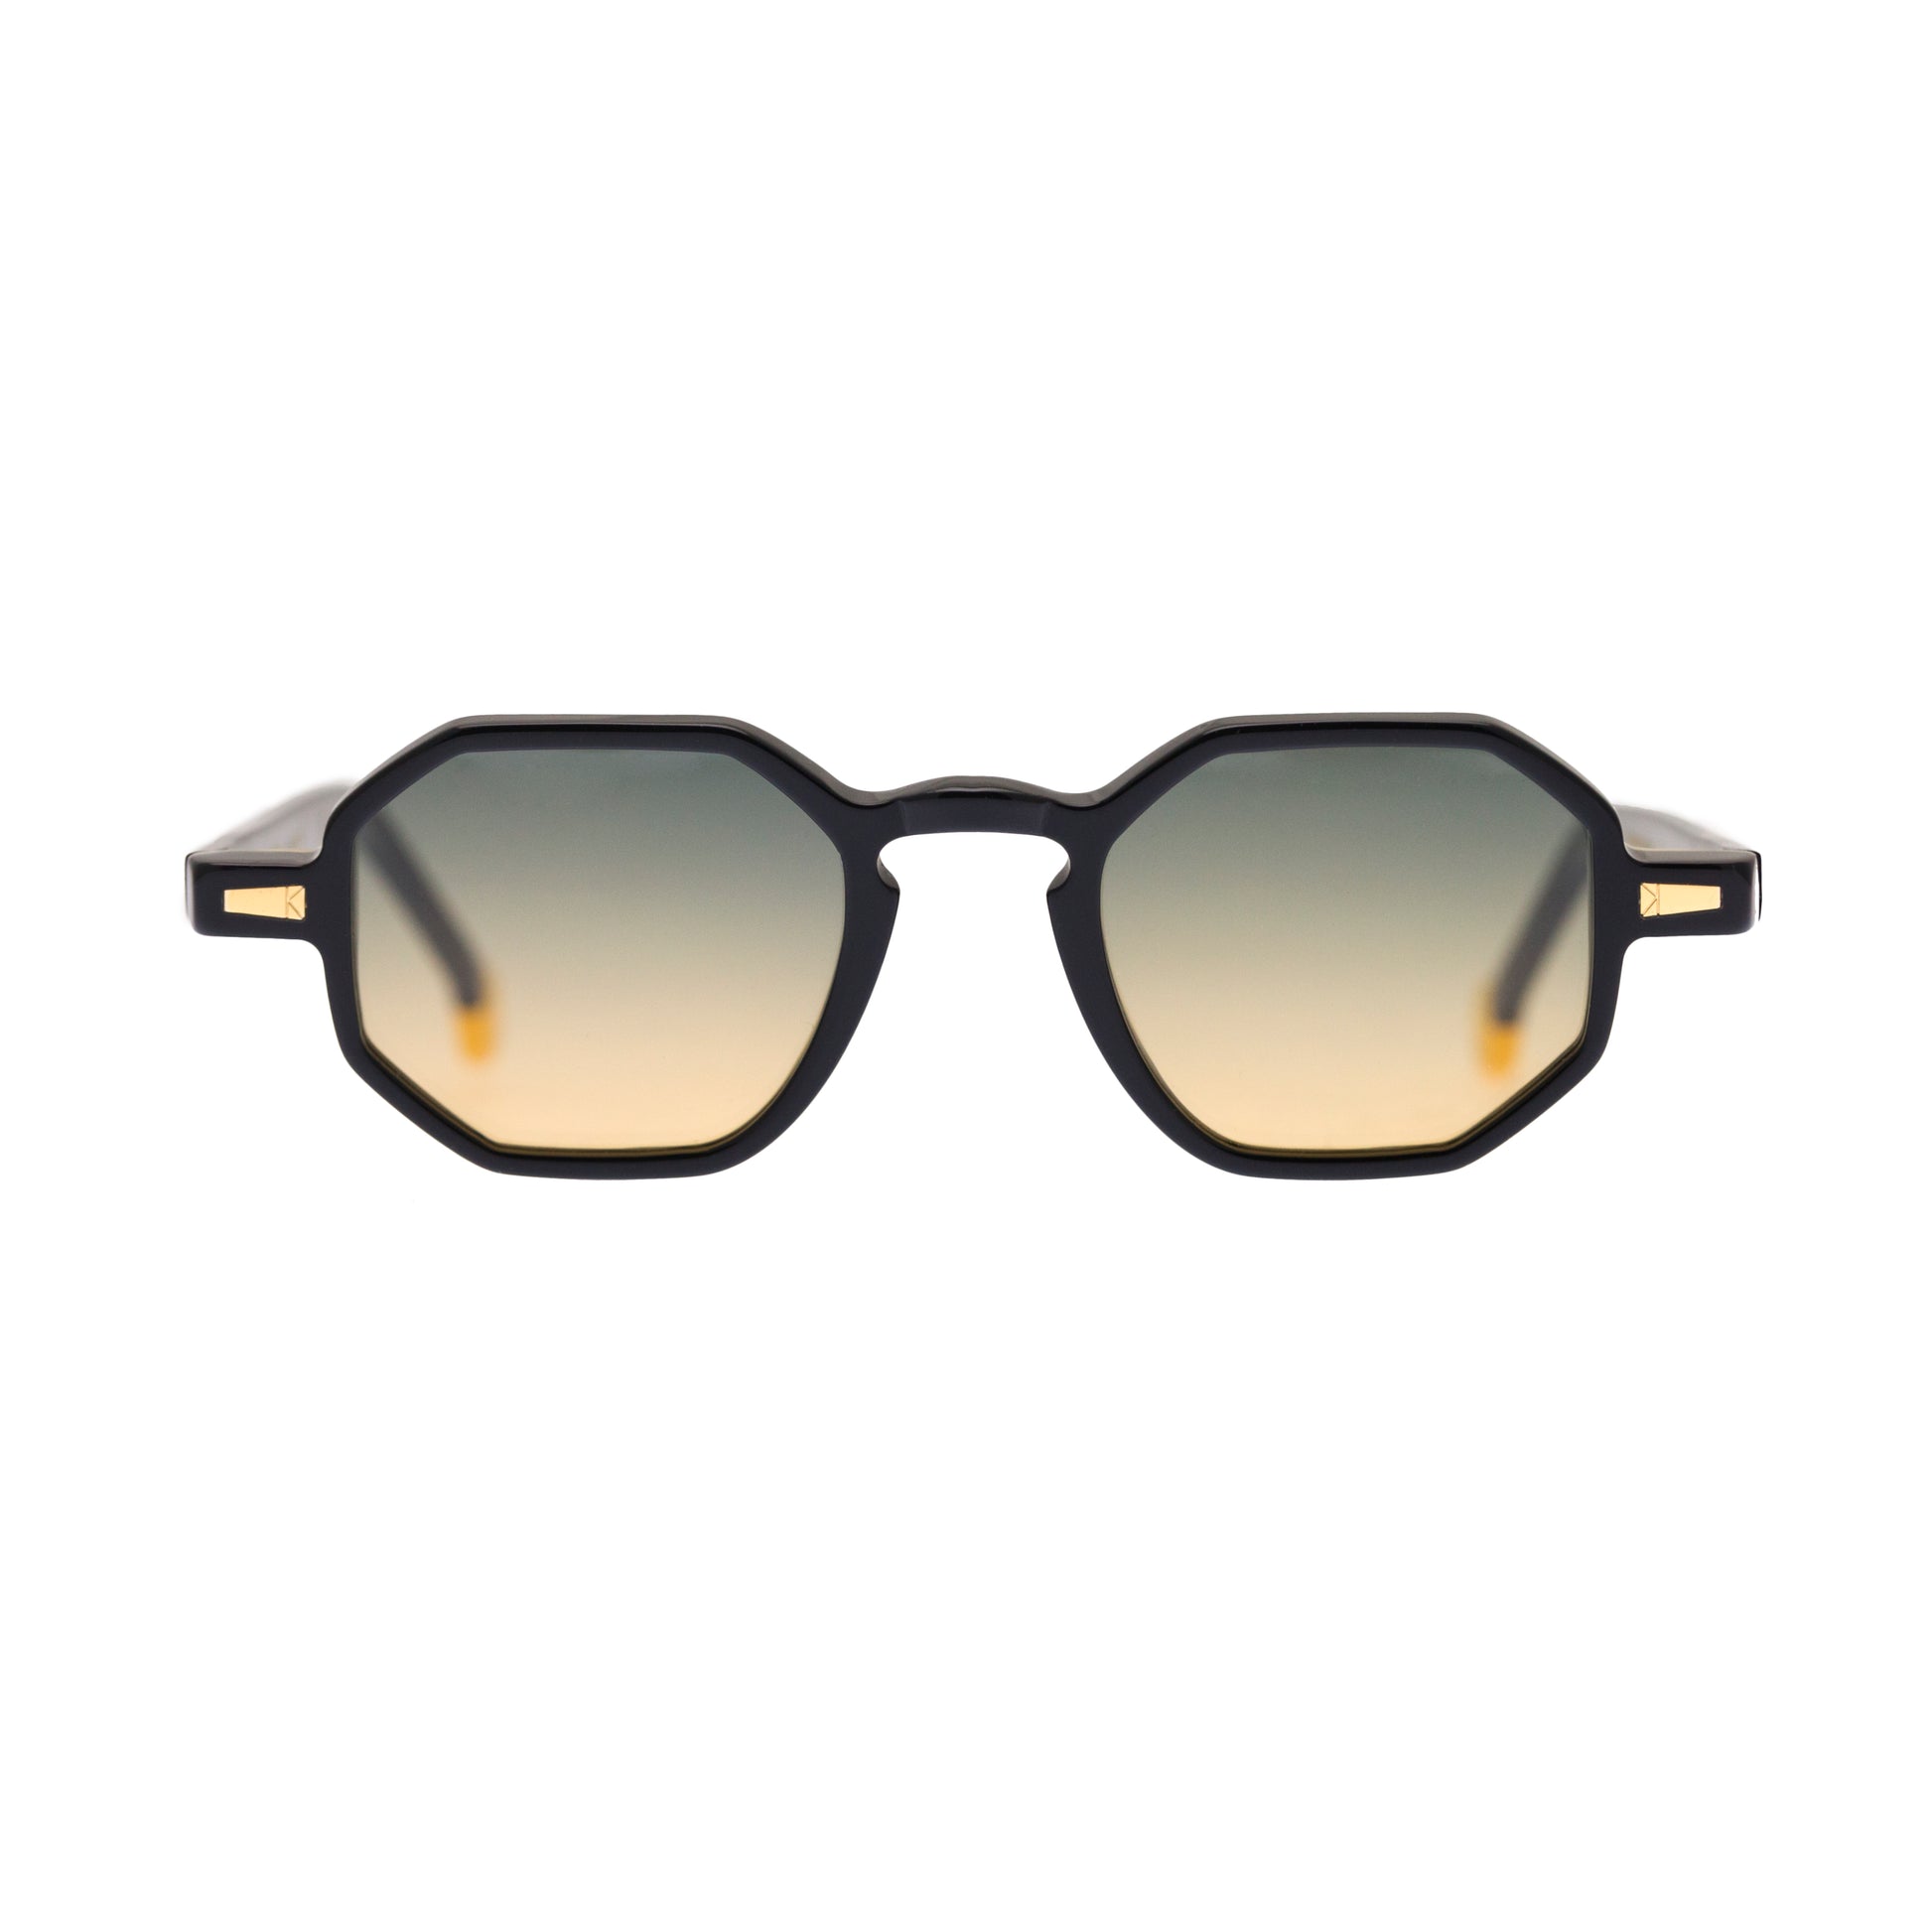 Rio: vintage style octagonal shaped acetate sunglasses - Kyme Eyewear